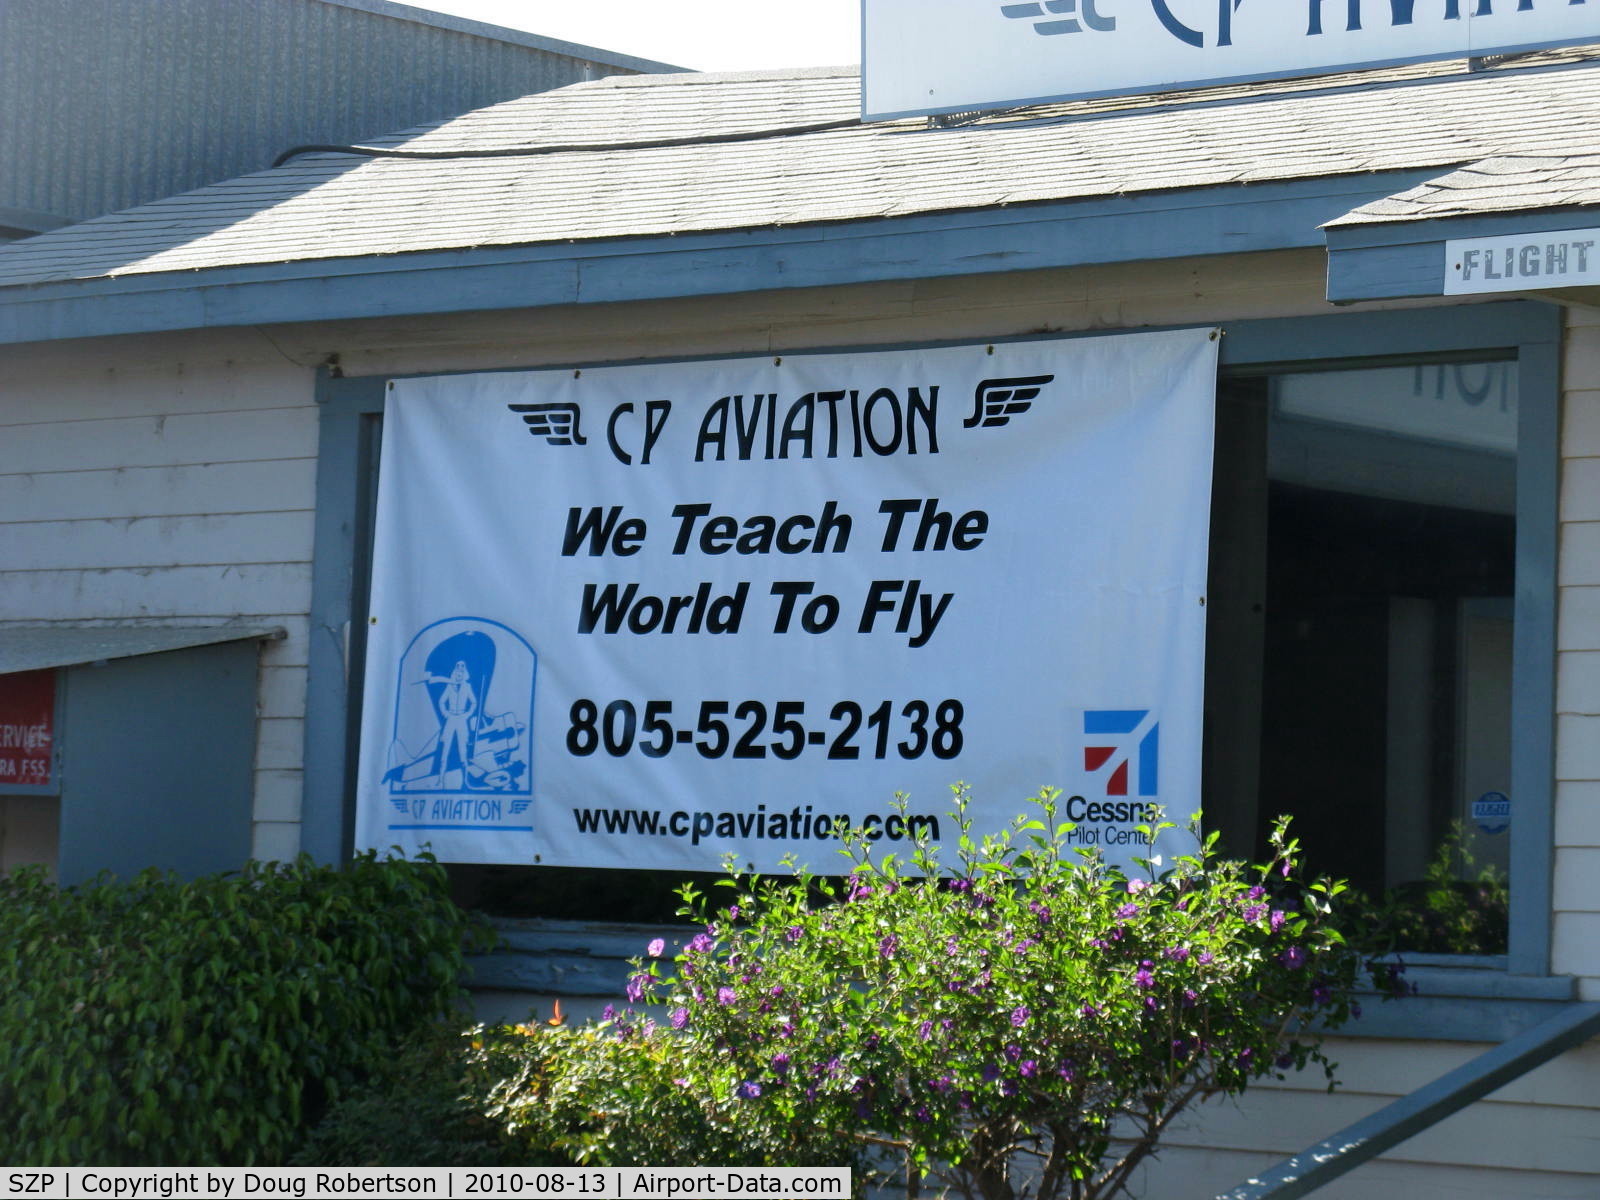 Santa Paula Airport (SZP) - CP AVIATION-We Teach the World to Fly.